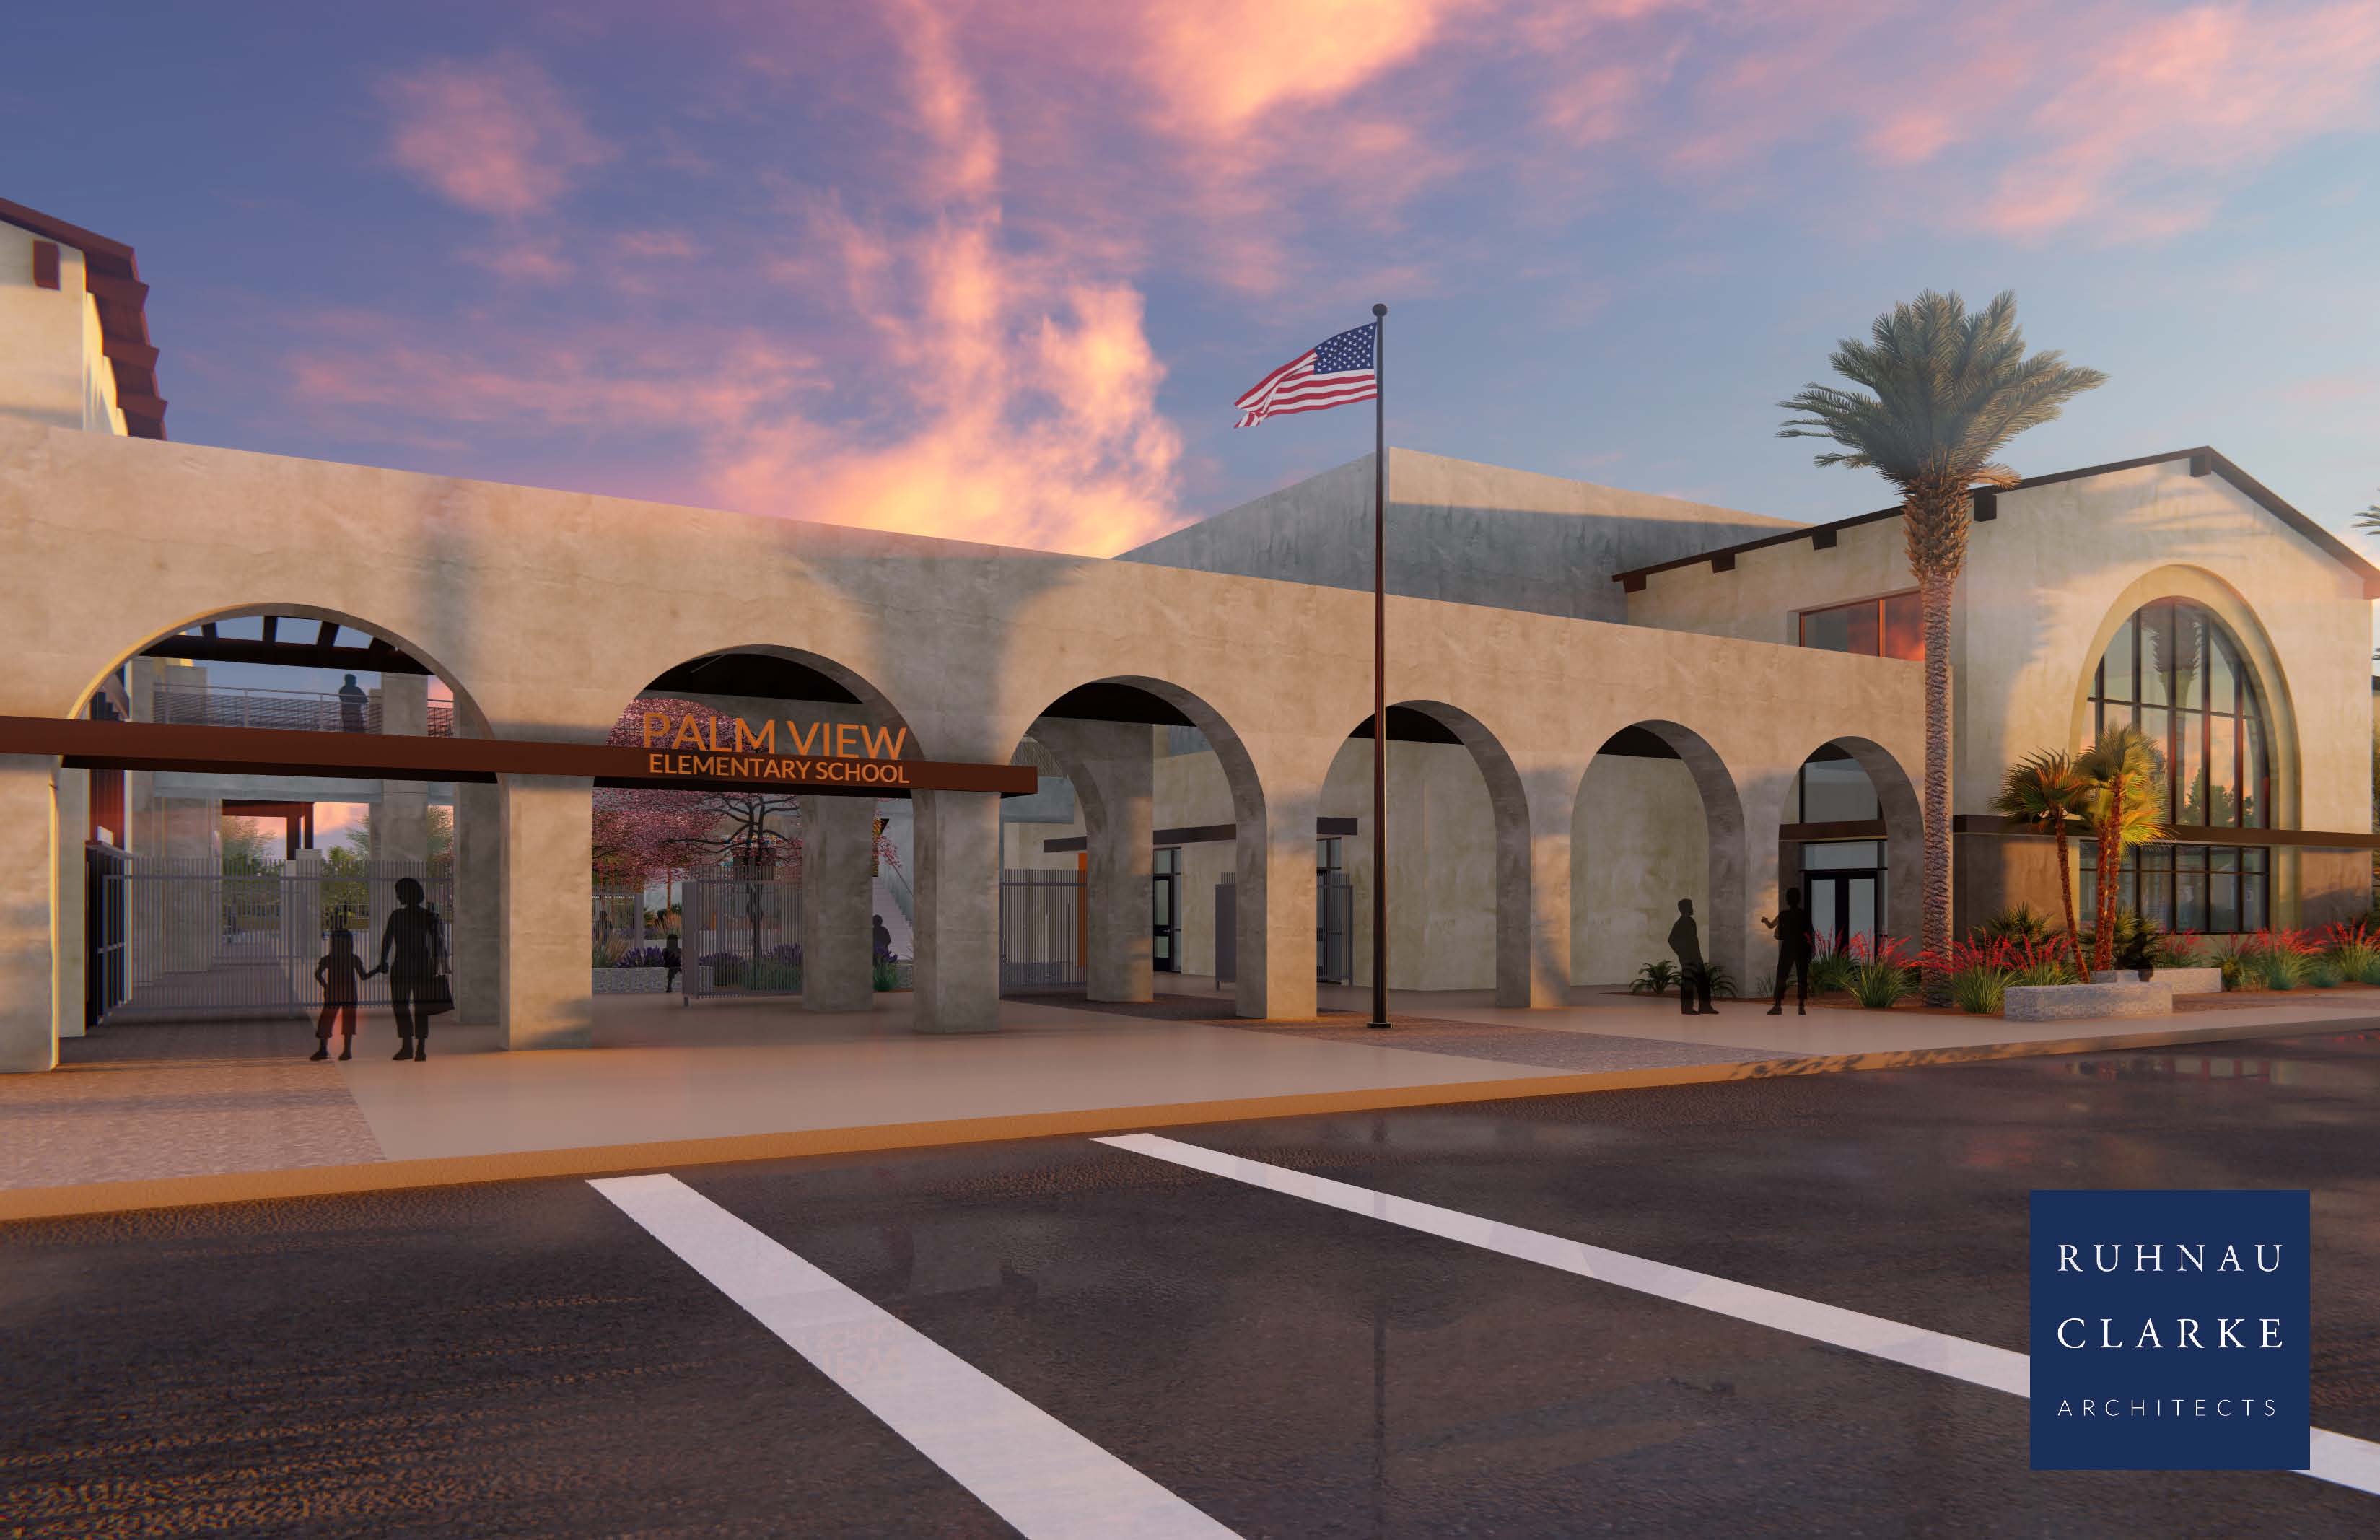 Palm View Elementary Coachella’s Oldest School Will a Modern